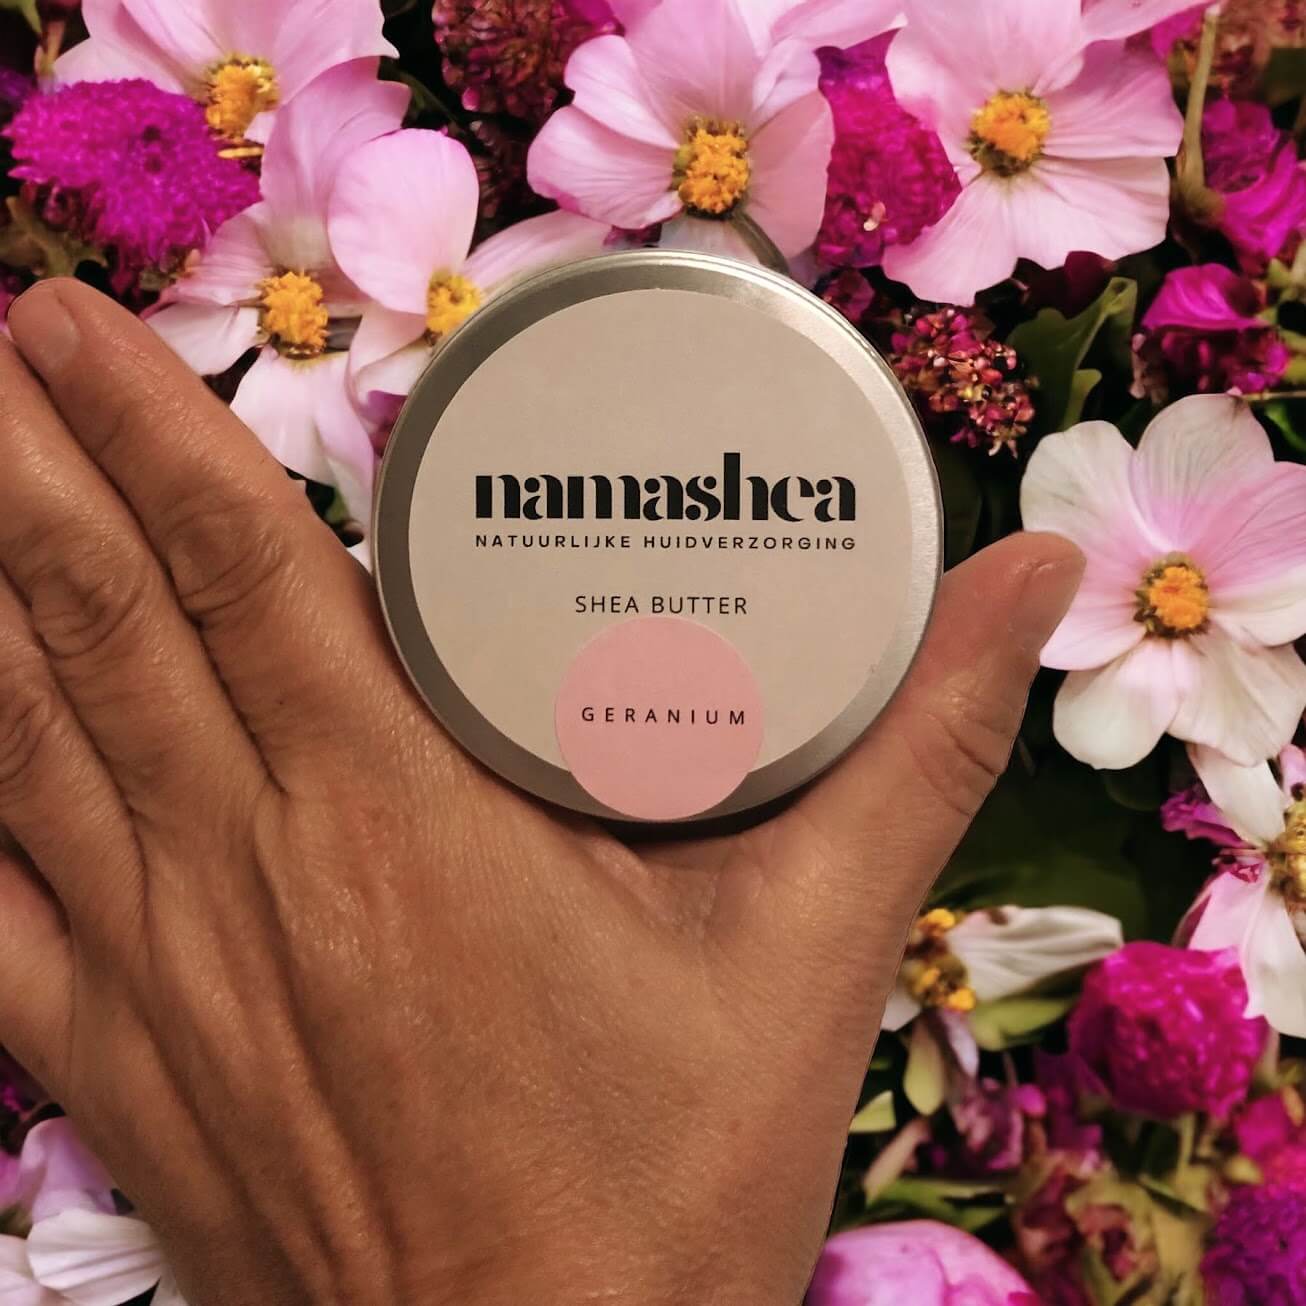 blik shea boter van Namashea tussen duim en wijsvinger. shea boter met geraniumolie met achtergrond vol rose bloemen